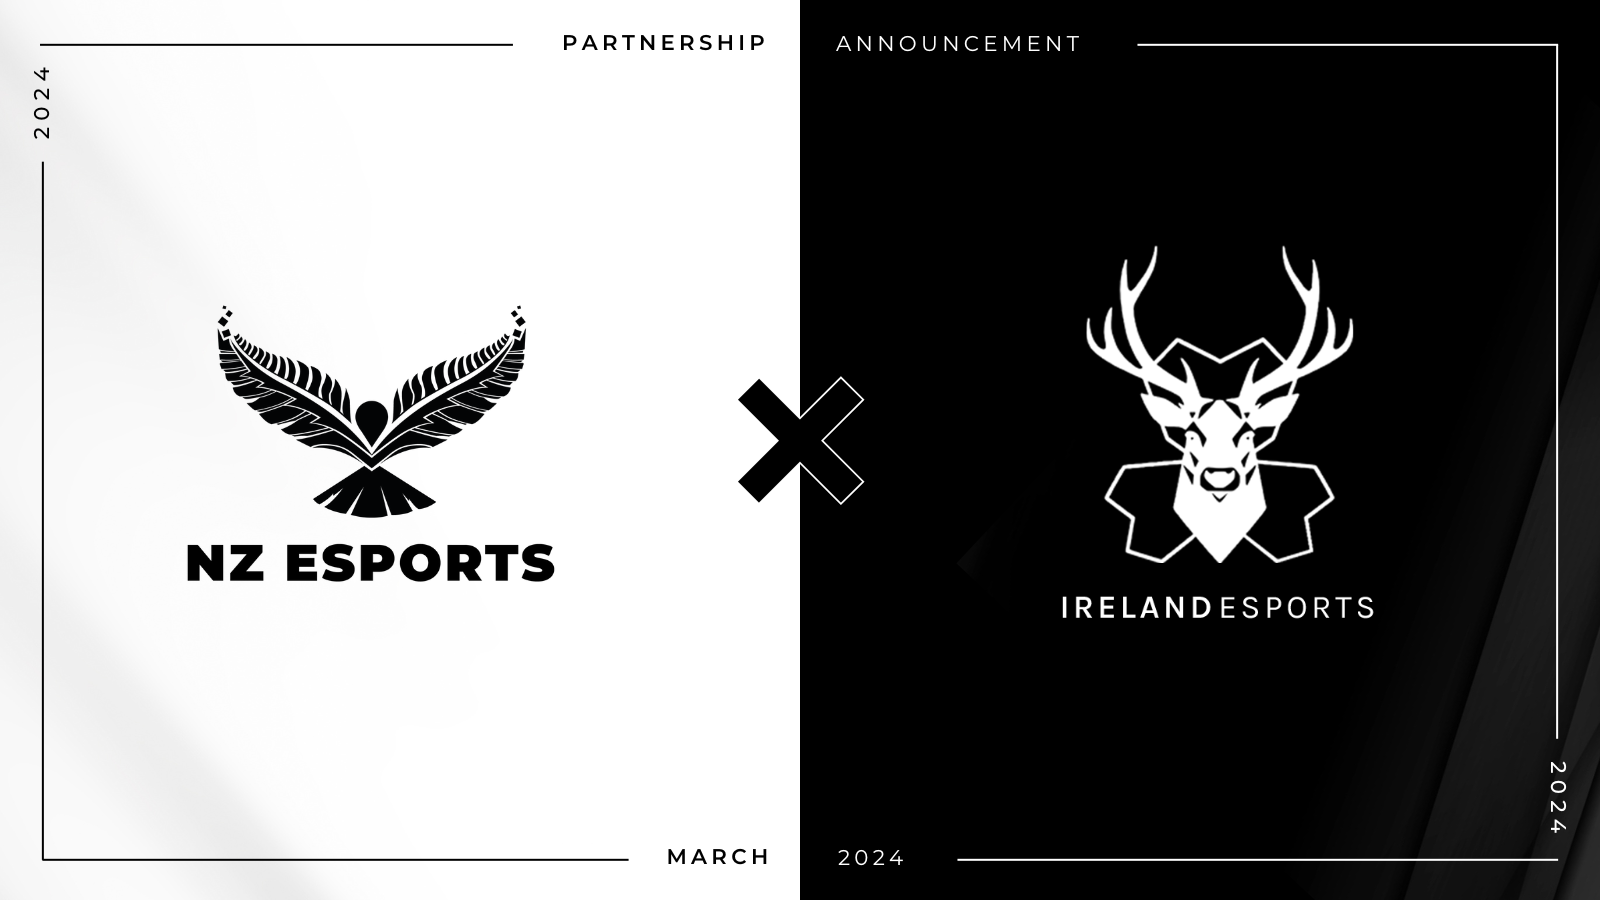 NZ Esports and Ireland Esports Partnership Announcement